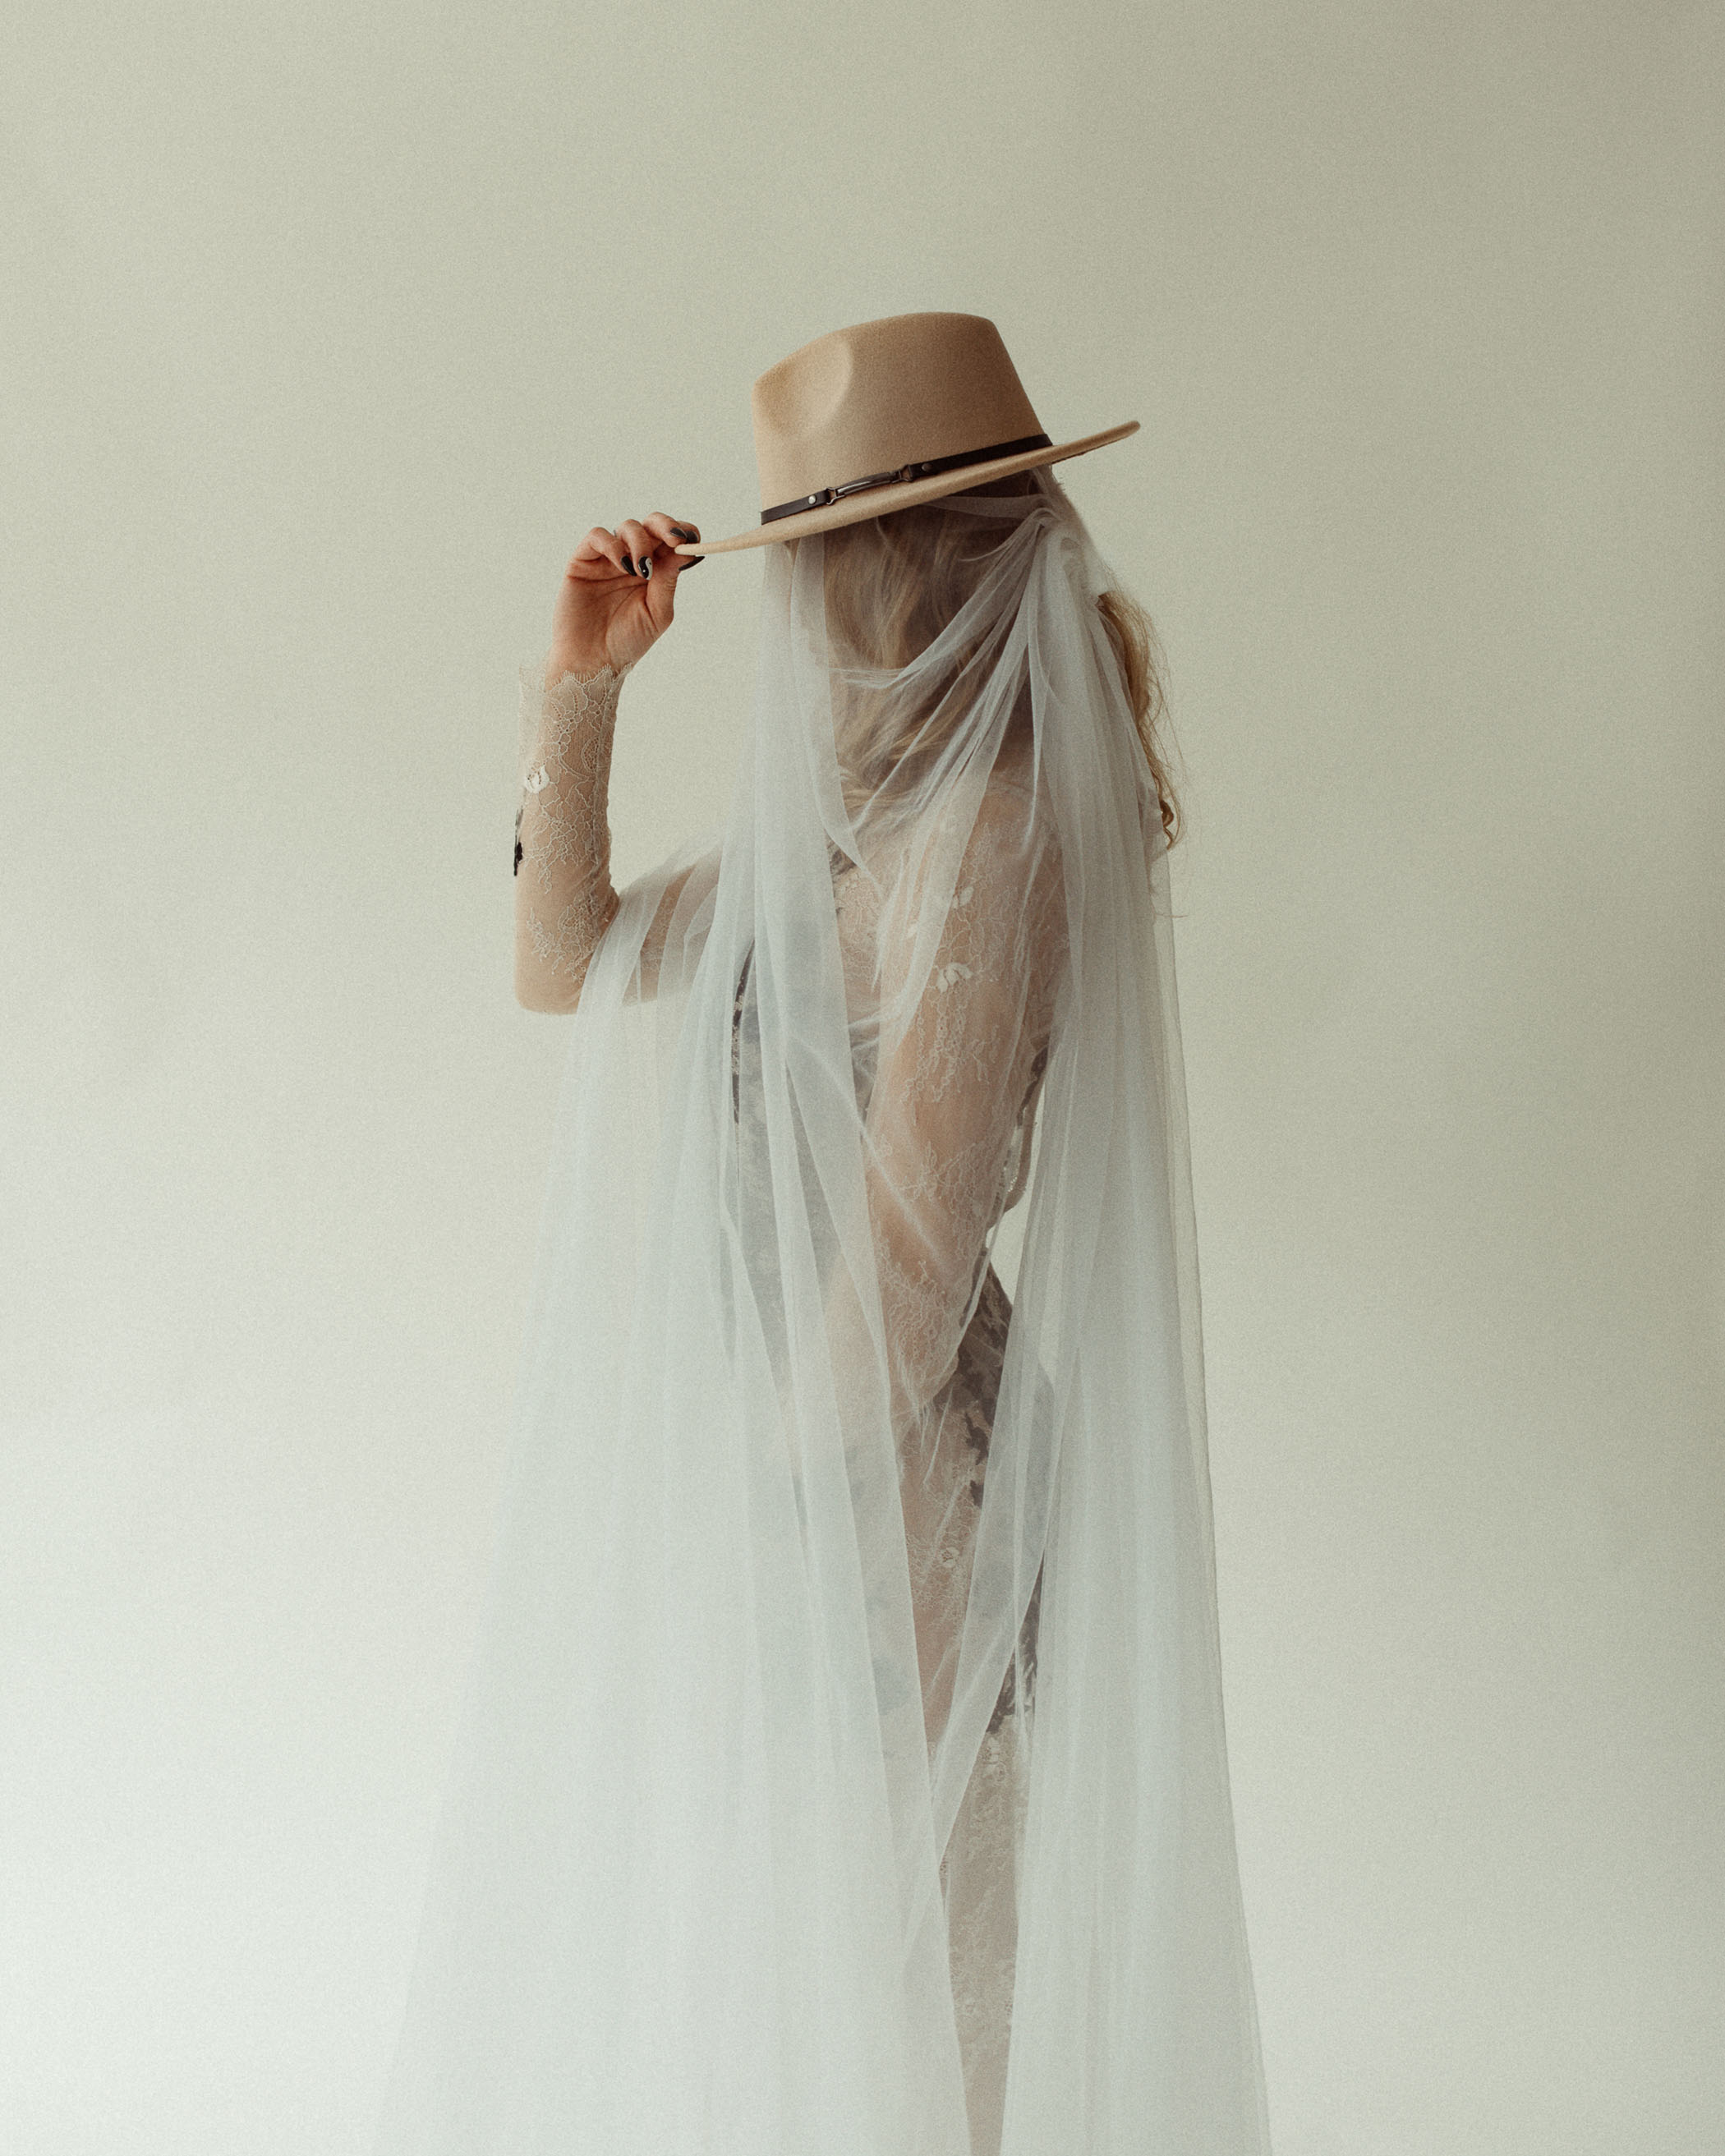 Artistic Bridal Hat and Veil